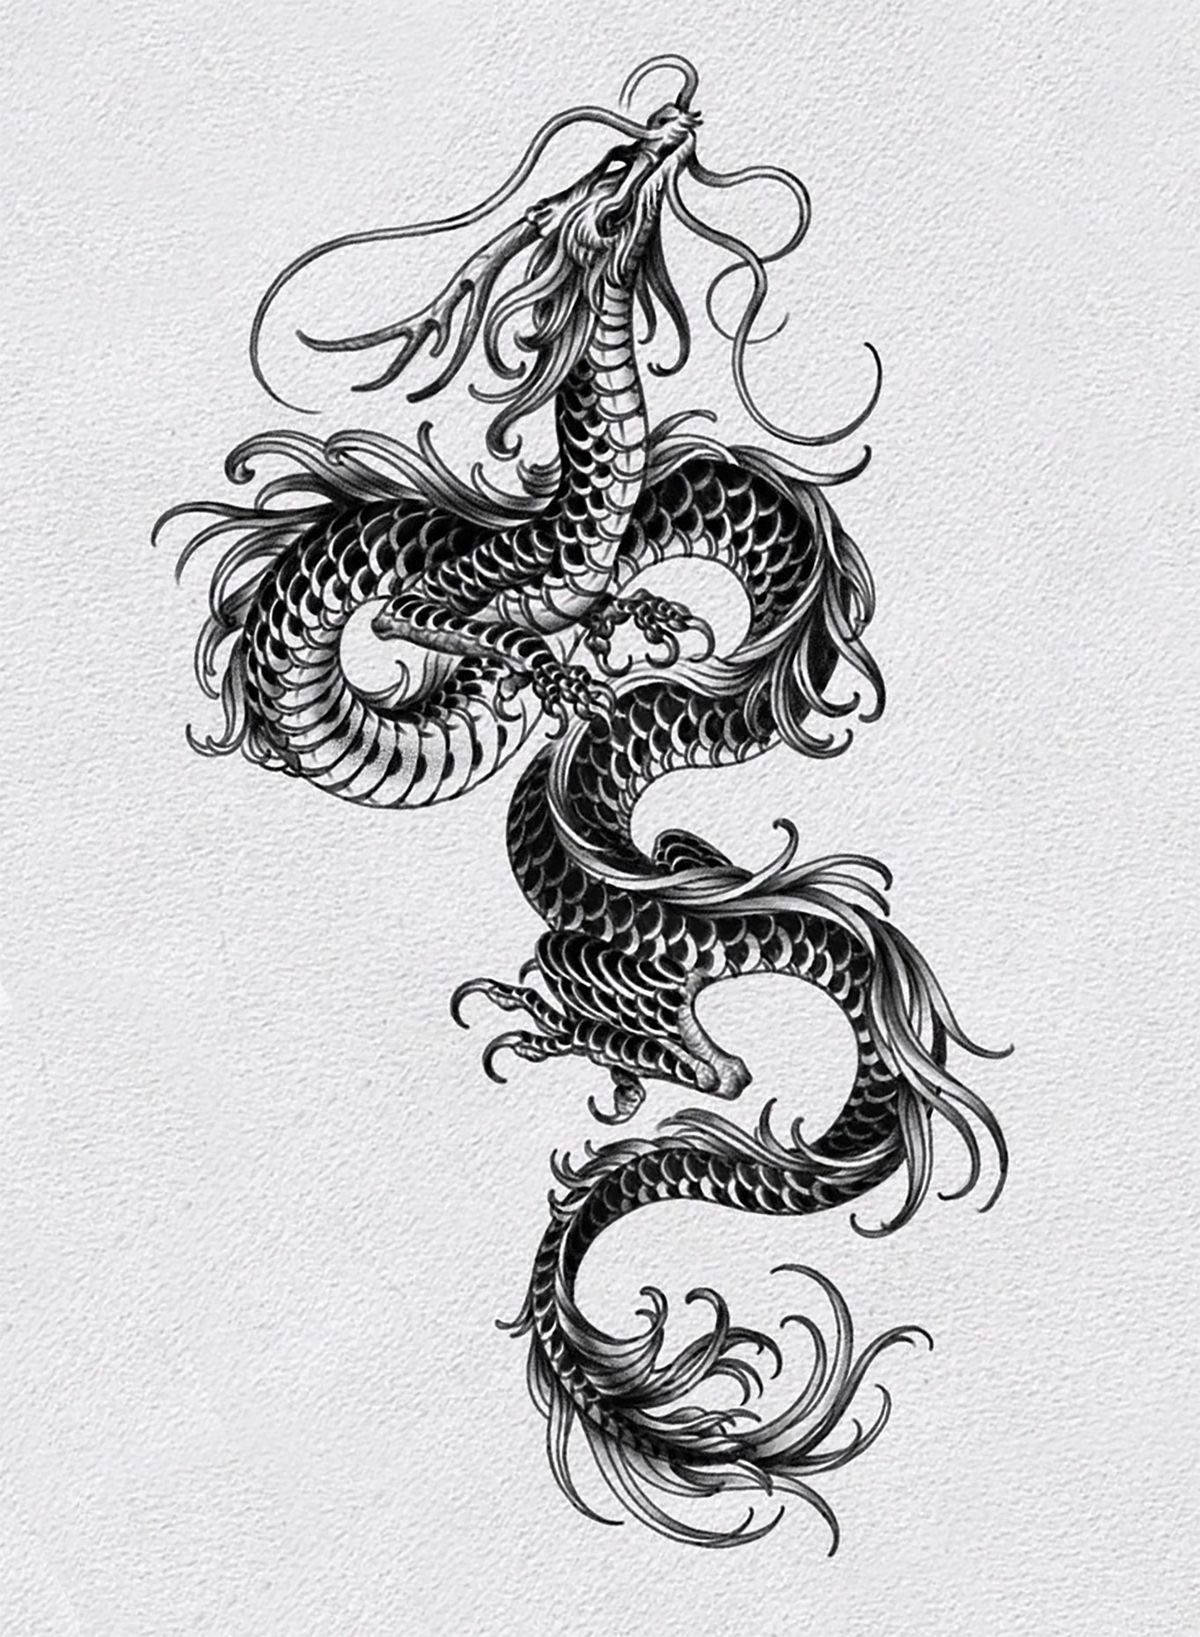 Caption: Unleashing Fury, The Elegance Of A Japanese Dragon Tattoo